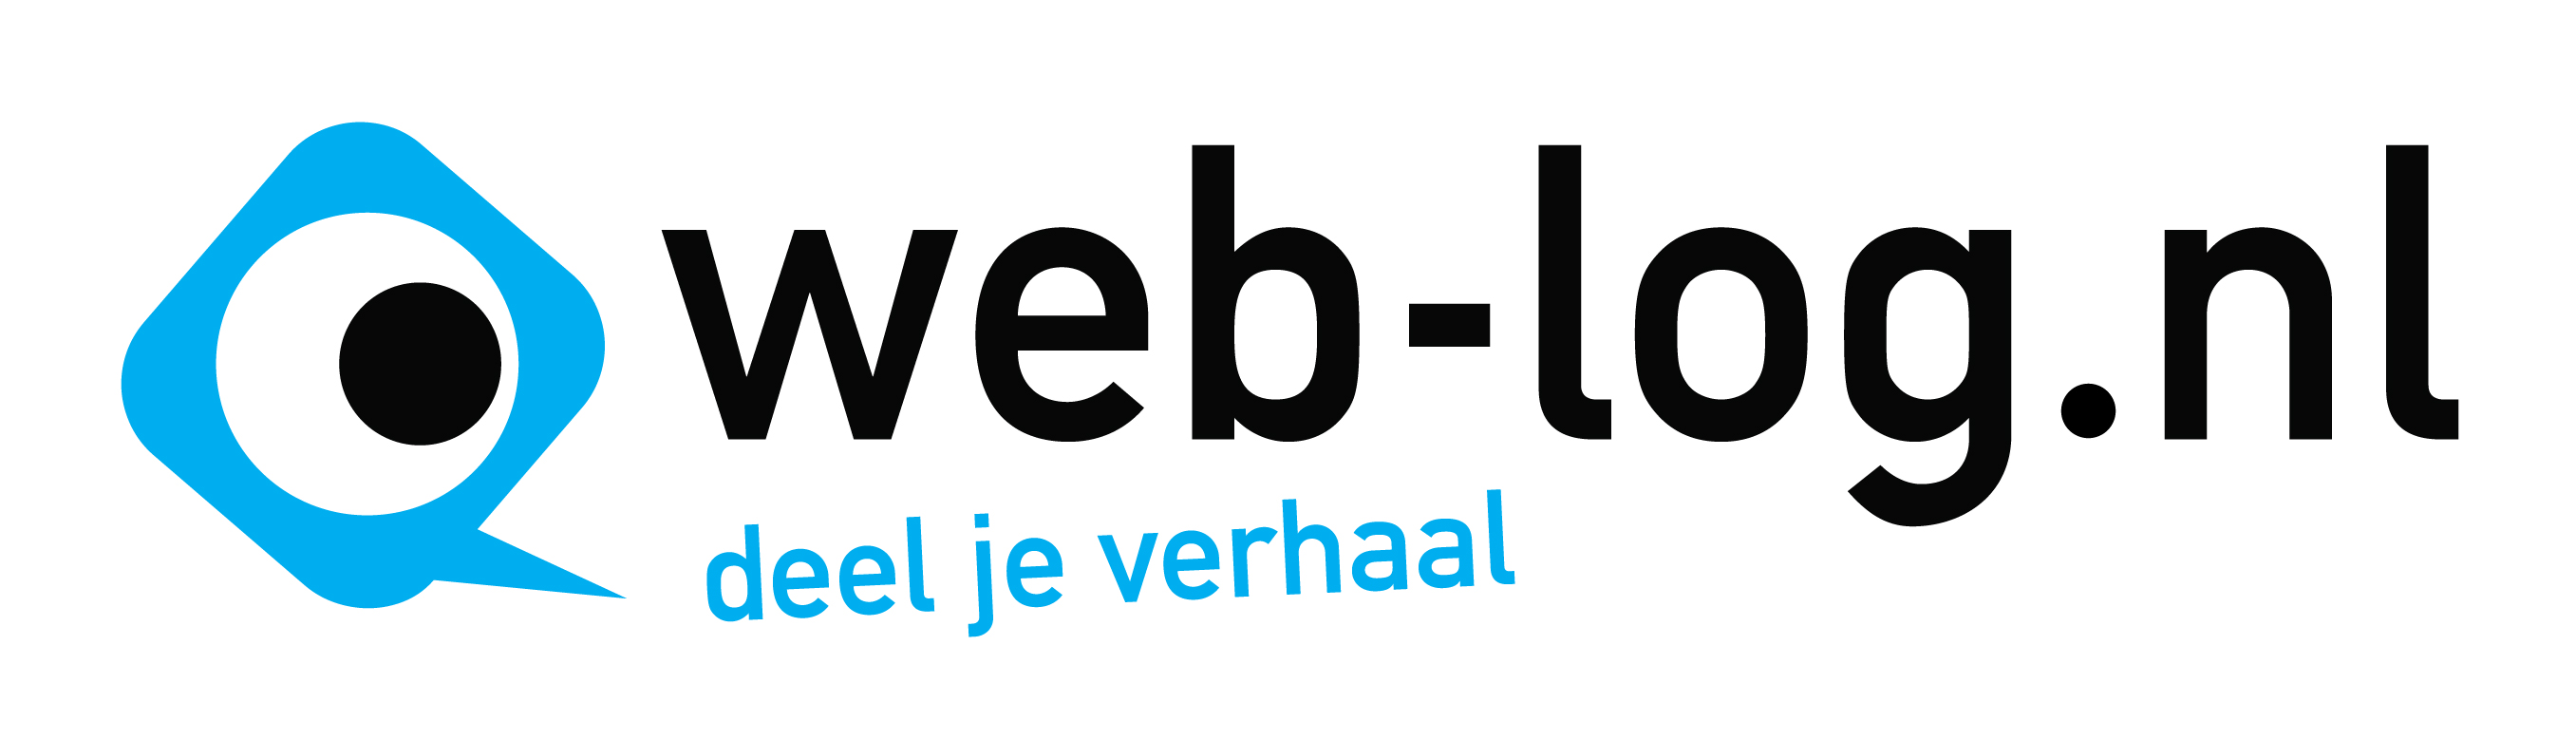 Web log logo definitief